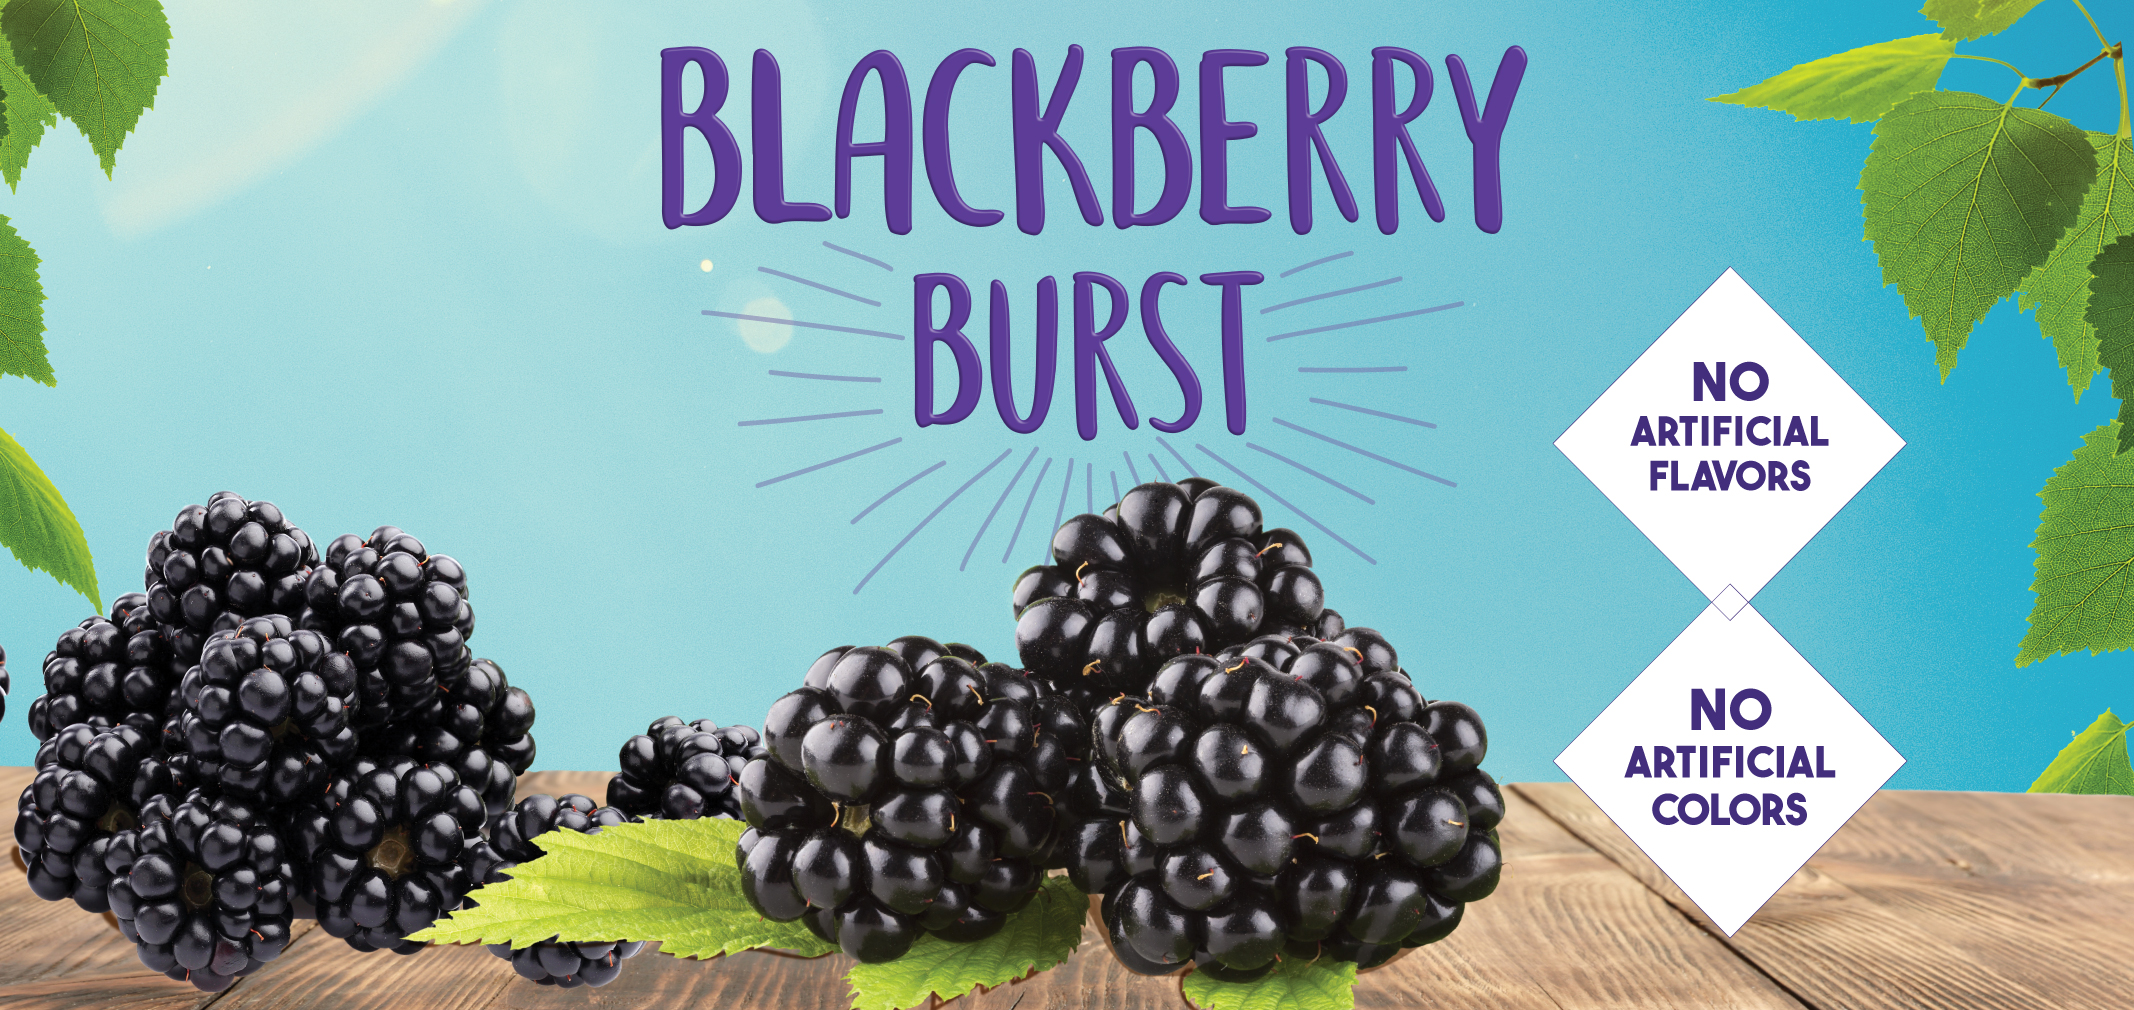 blackberry burst label image